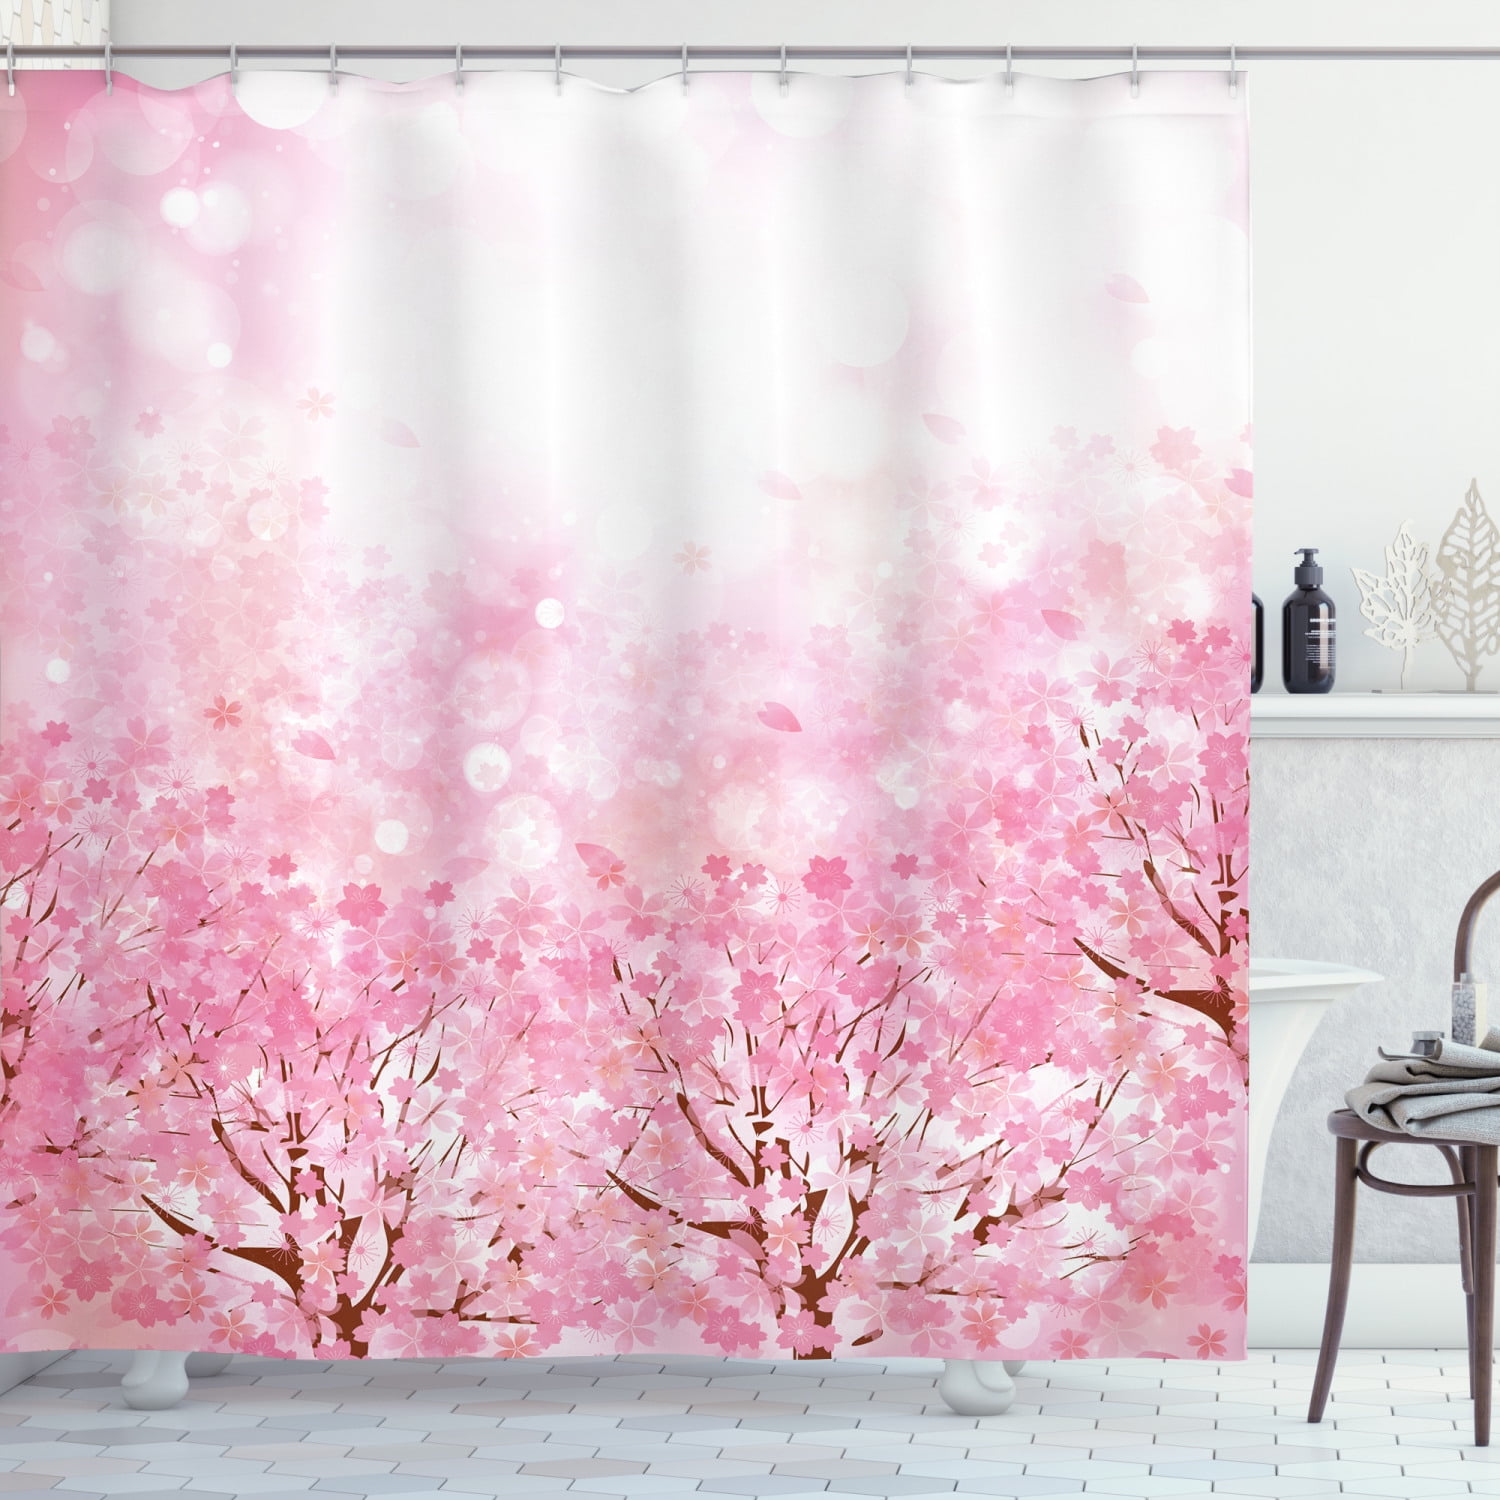 Details about   Dream Pink Cherry Blossom Flowers Shower Curtain Japanese Sakura Bathroom Decor 